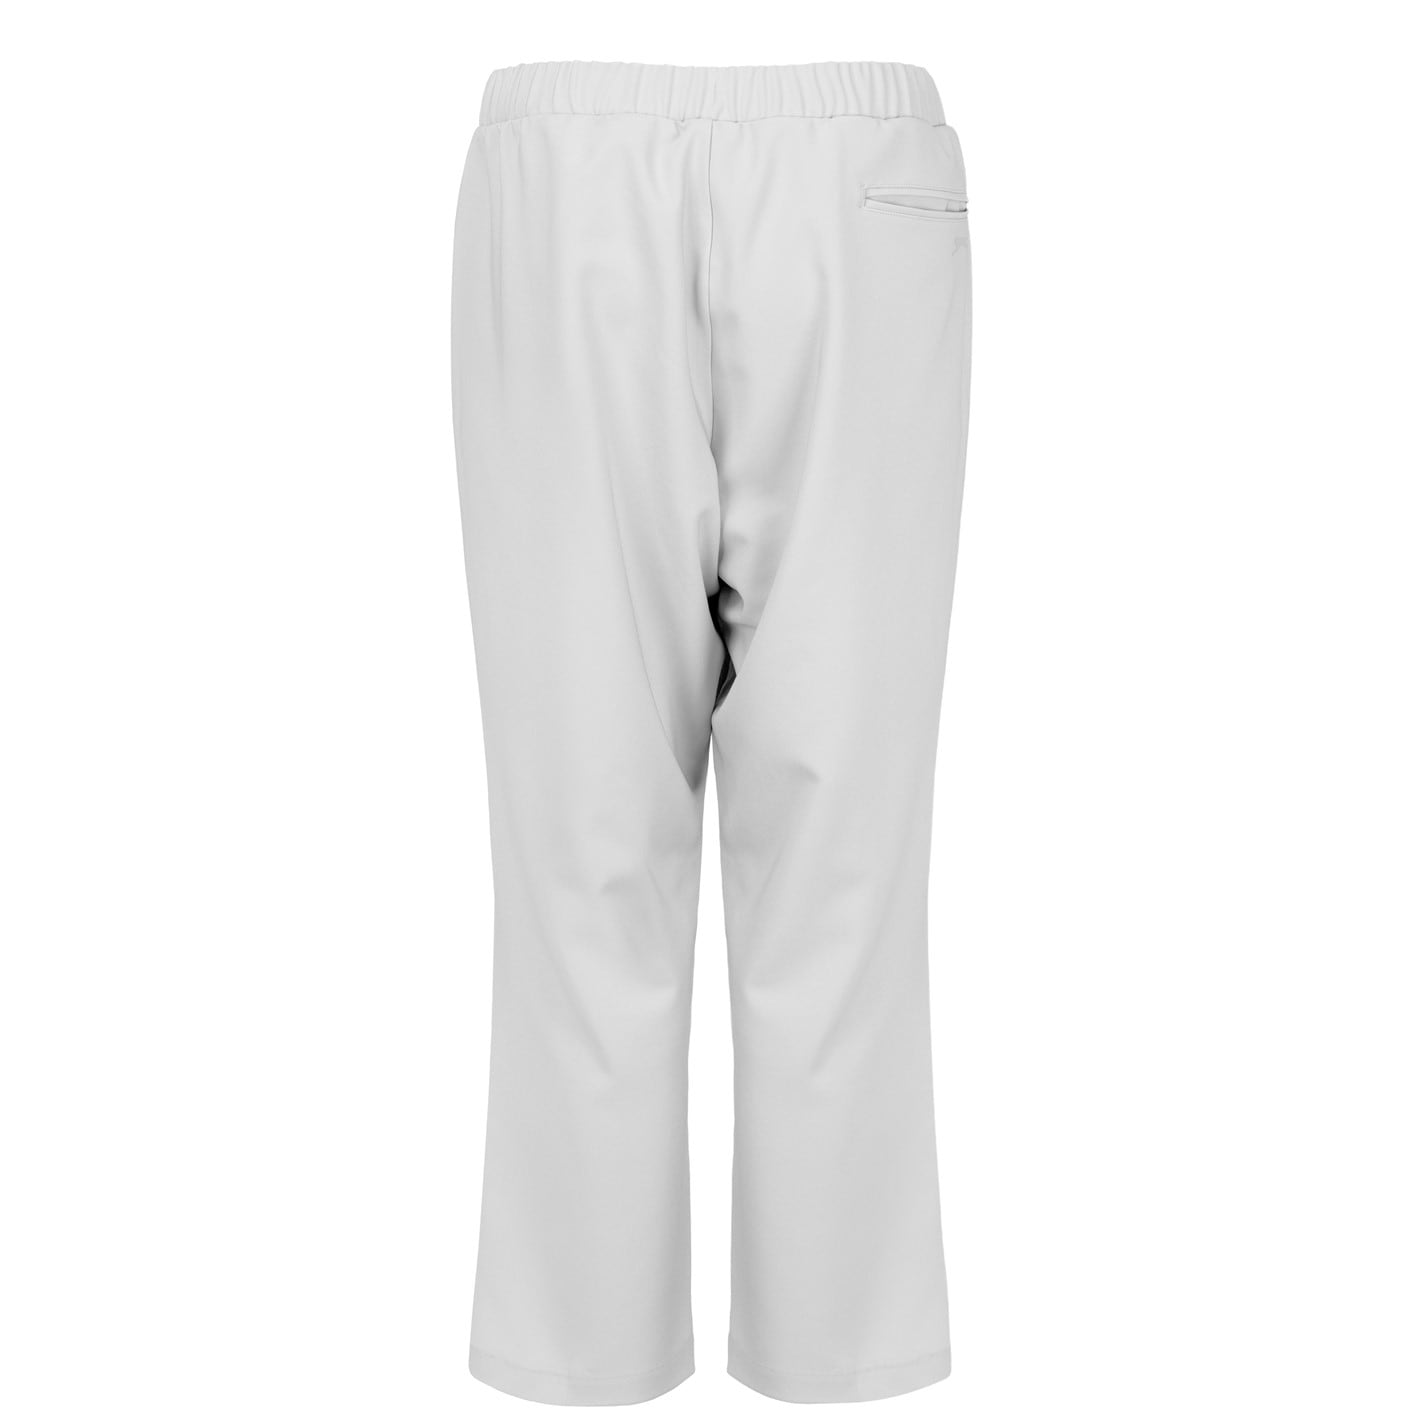 Pantaloni Slazenger Capri pentru Femei gri